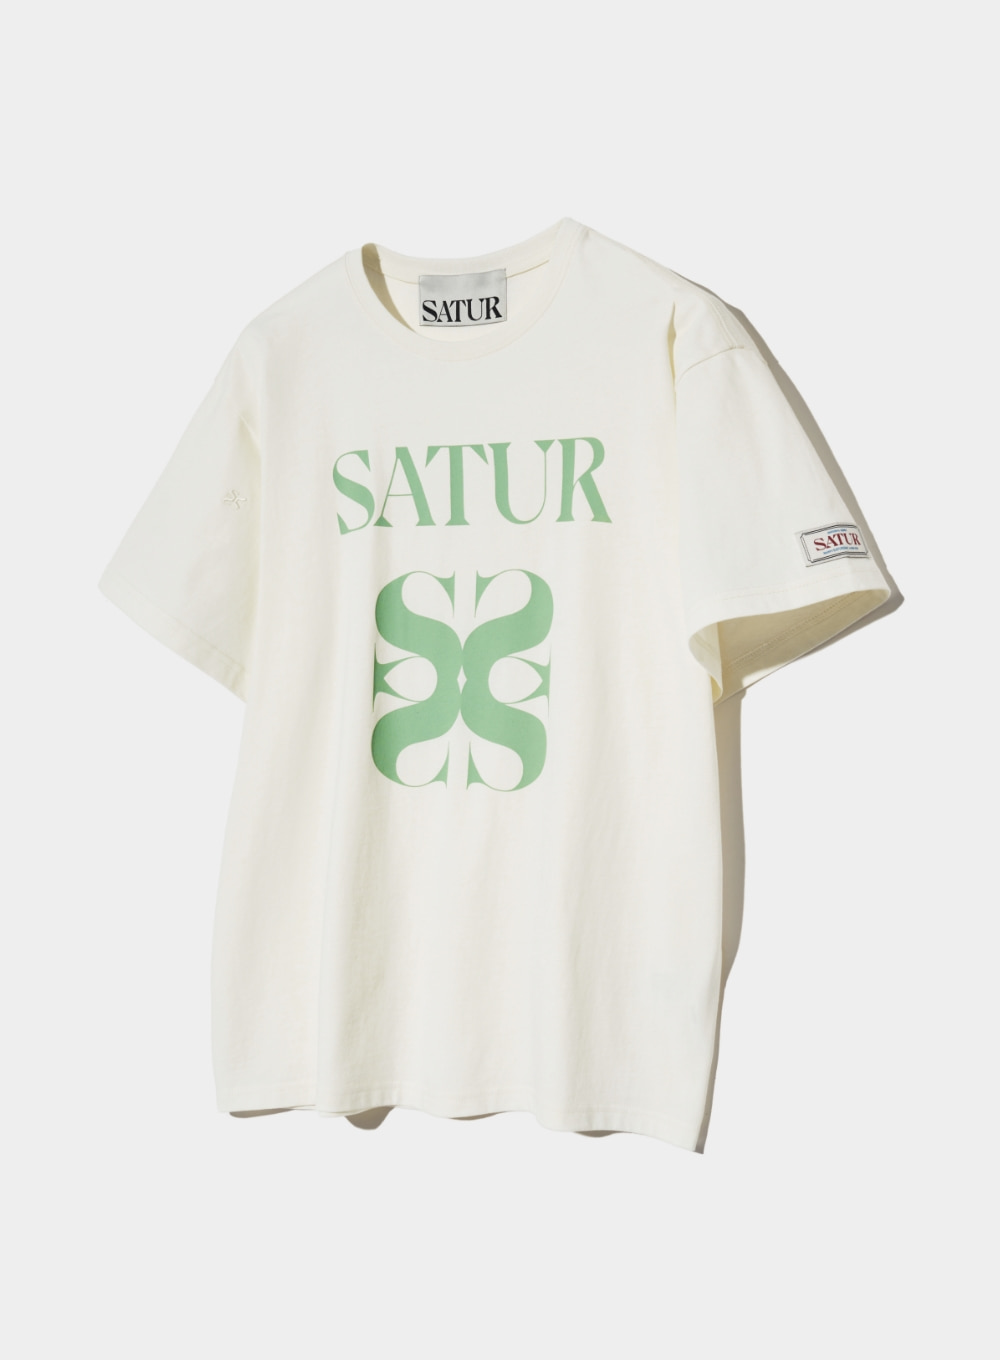 Satur All Day T-Shirt - Cream Mint